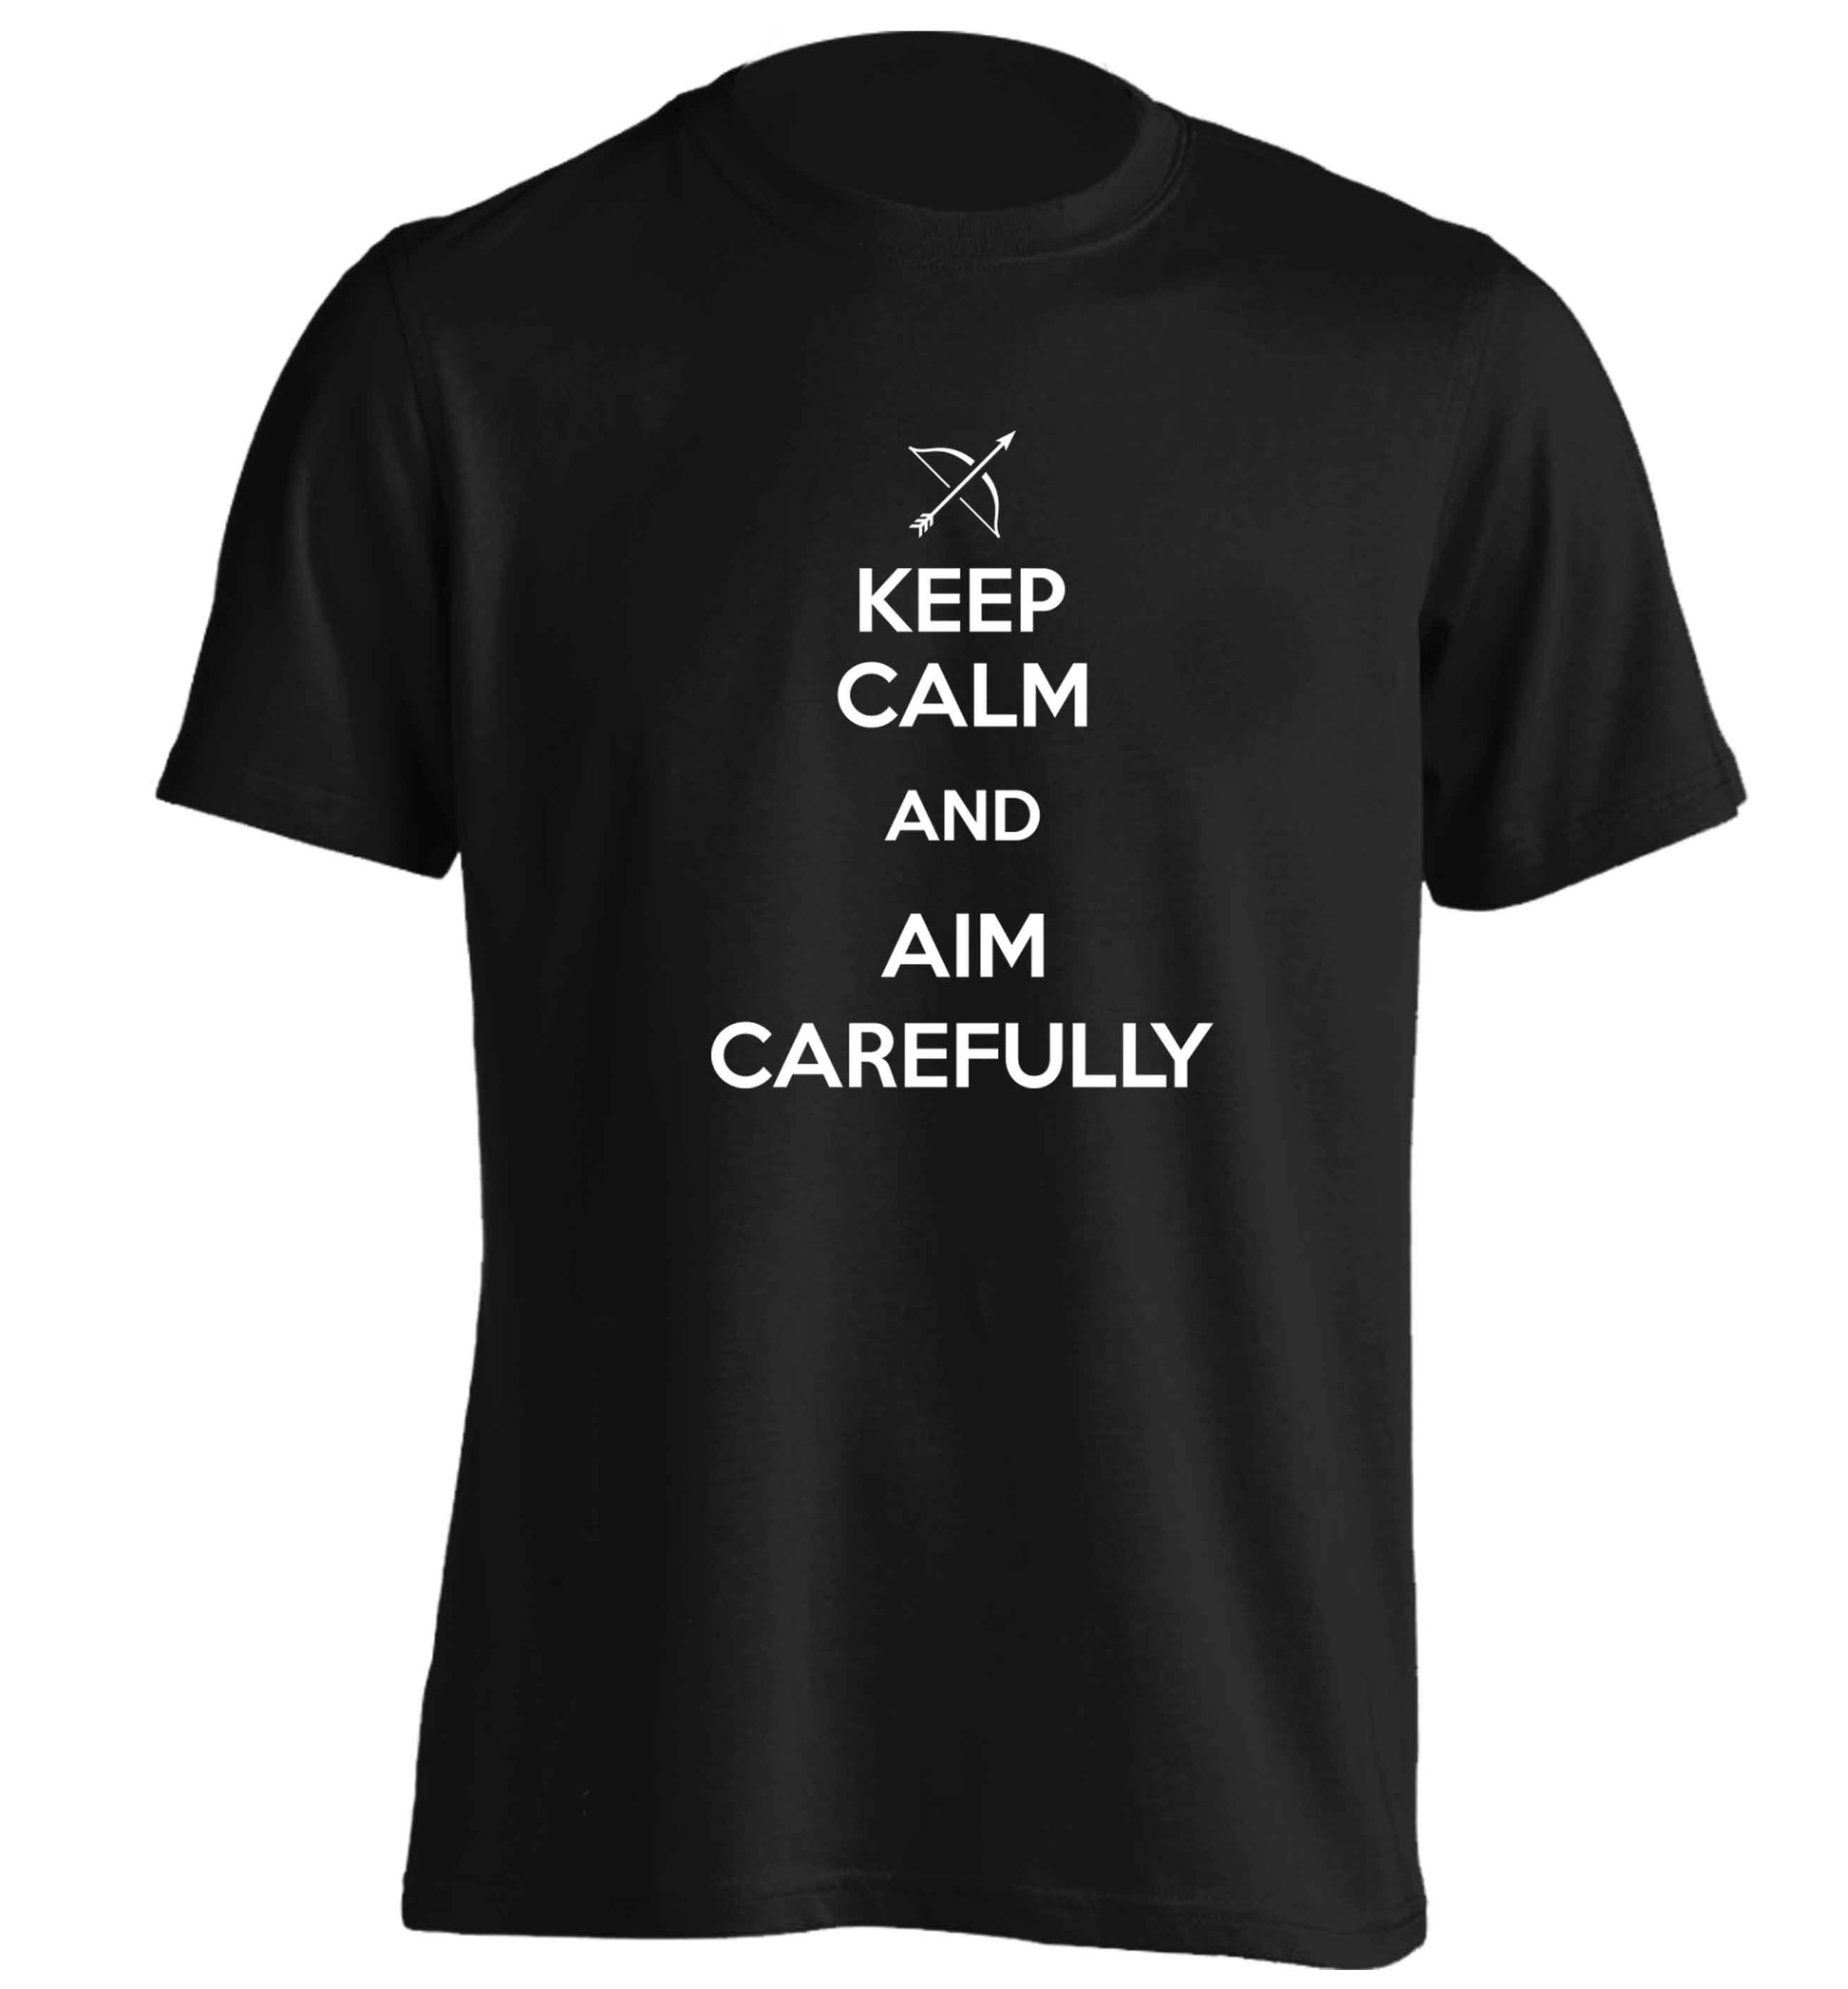 Keep calm and aim carefully adults unisex black Tshirt 2XL